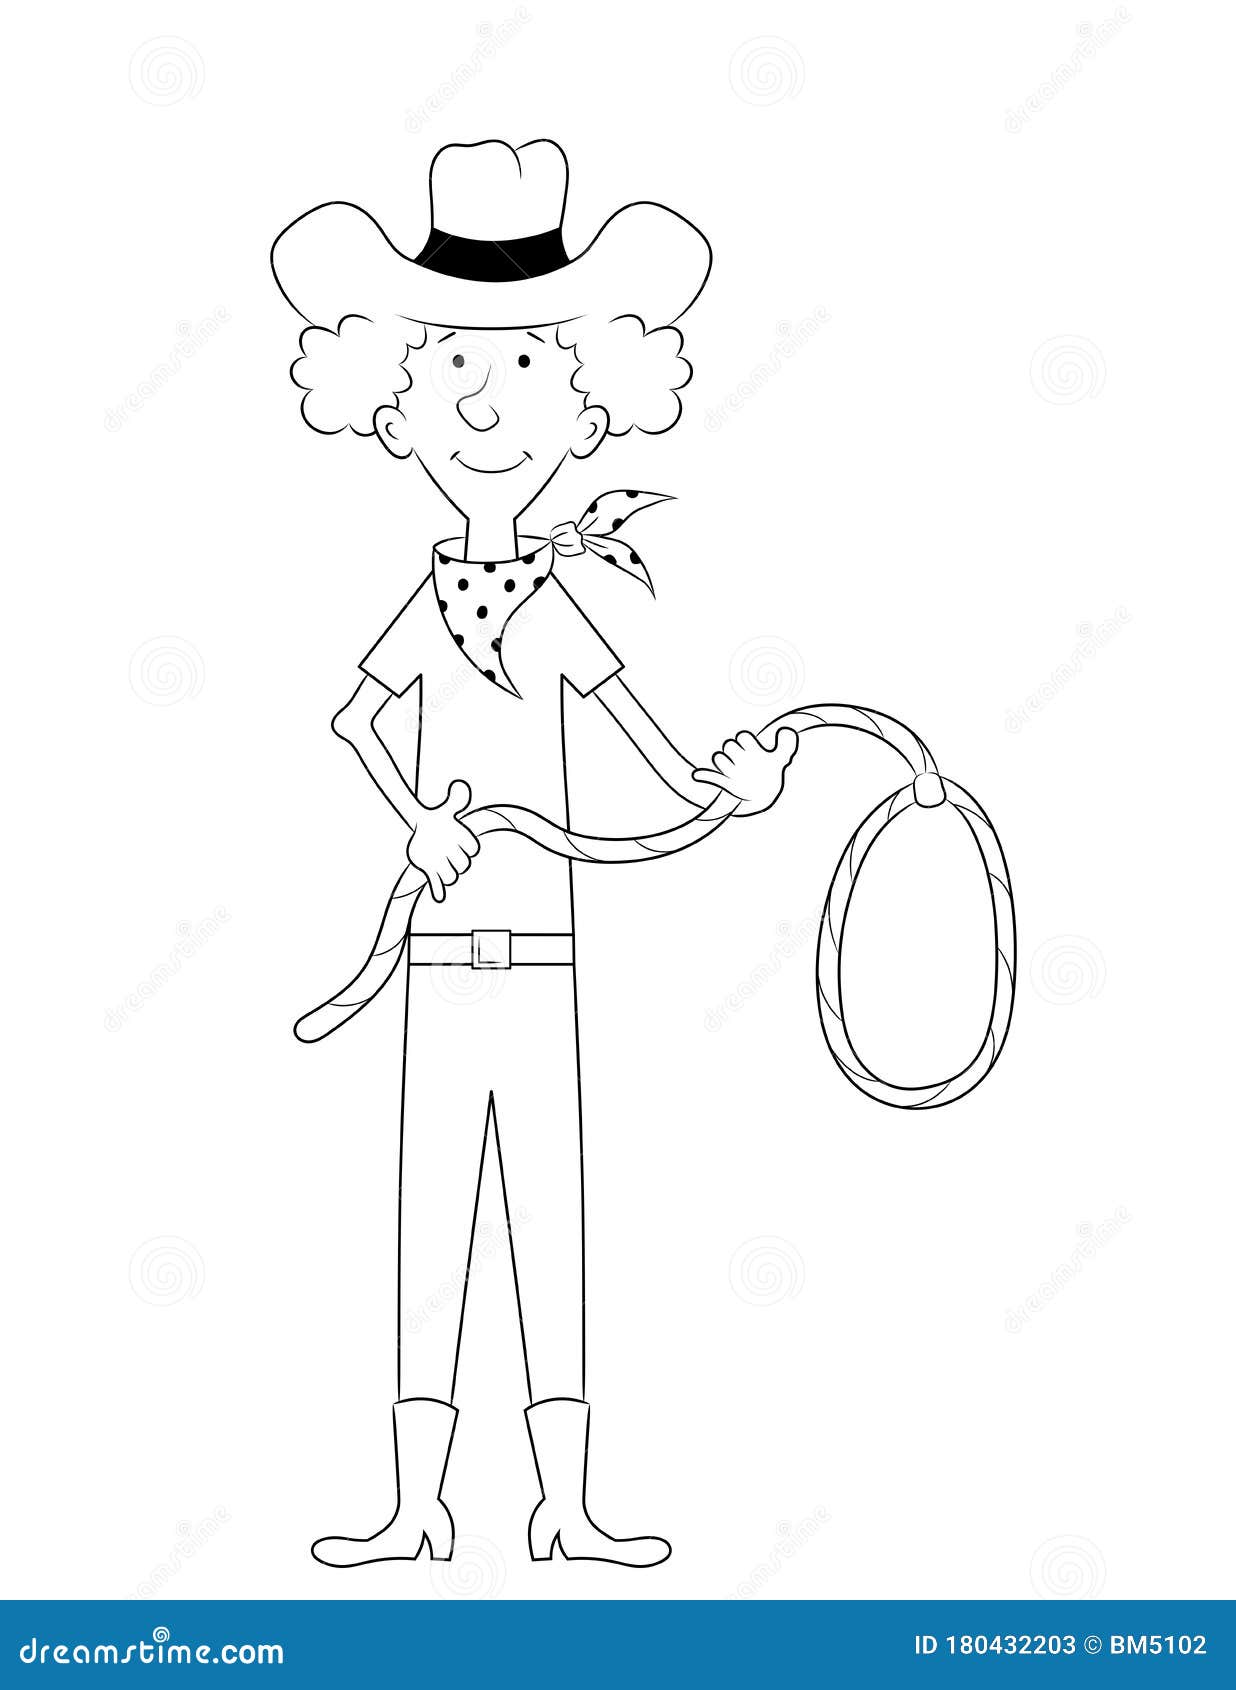 https://thumbs.dreamstime.com/z/cartoon-cowboy-lasso-outline-drawing-male-cowboy-character-hat-boots-neckerchief-lasso-his-hands-black-180432203.jpg